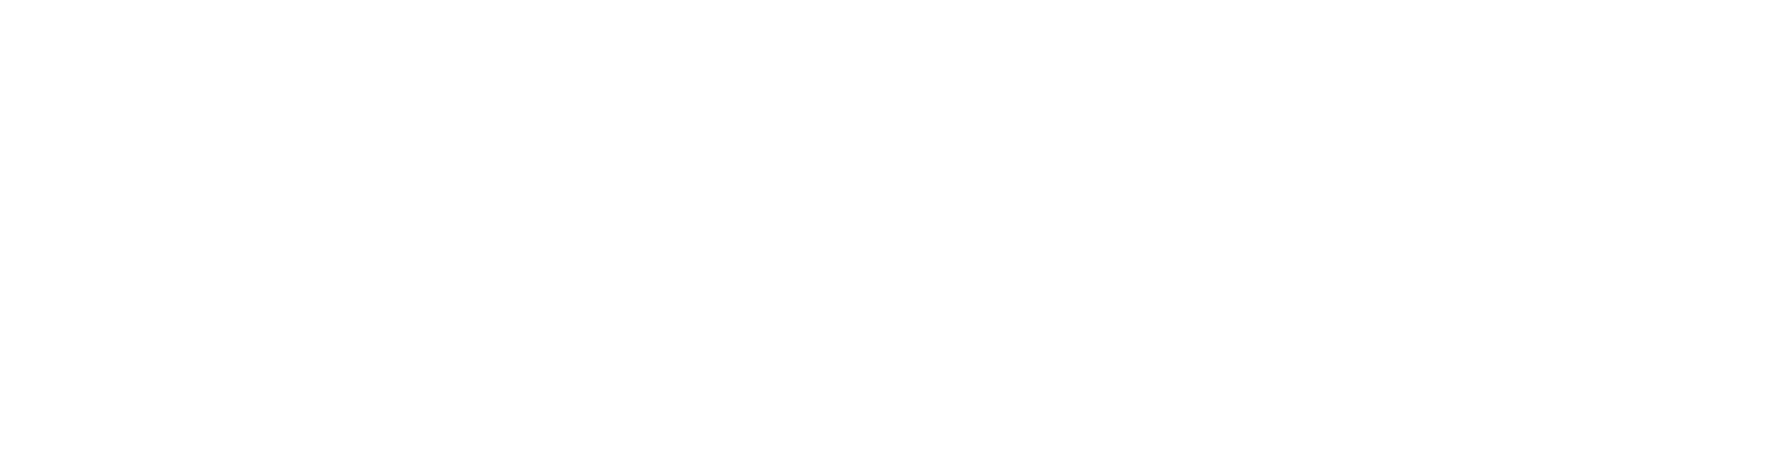 Geneva International Film Festival logo